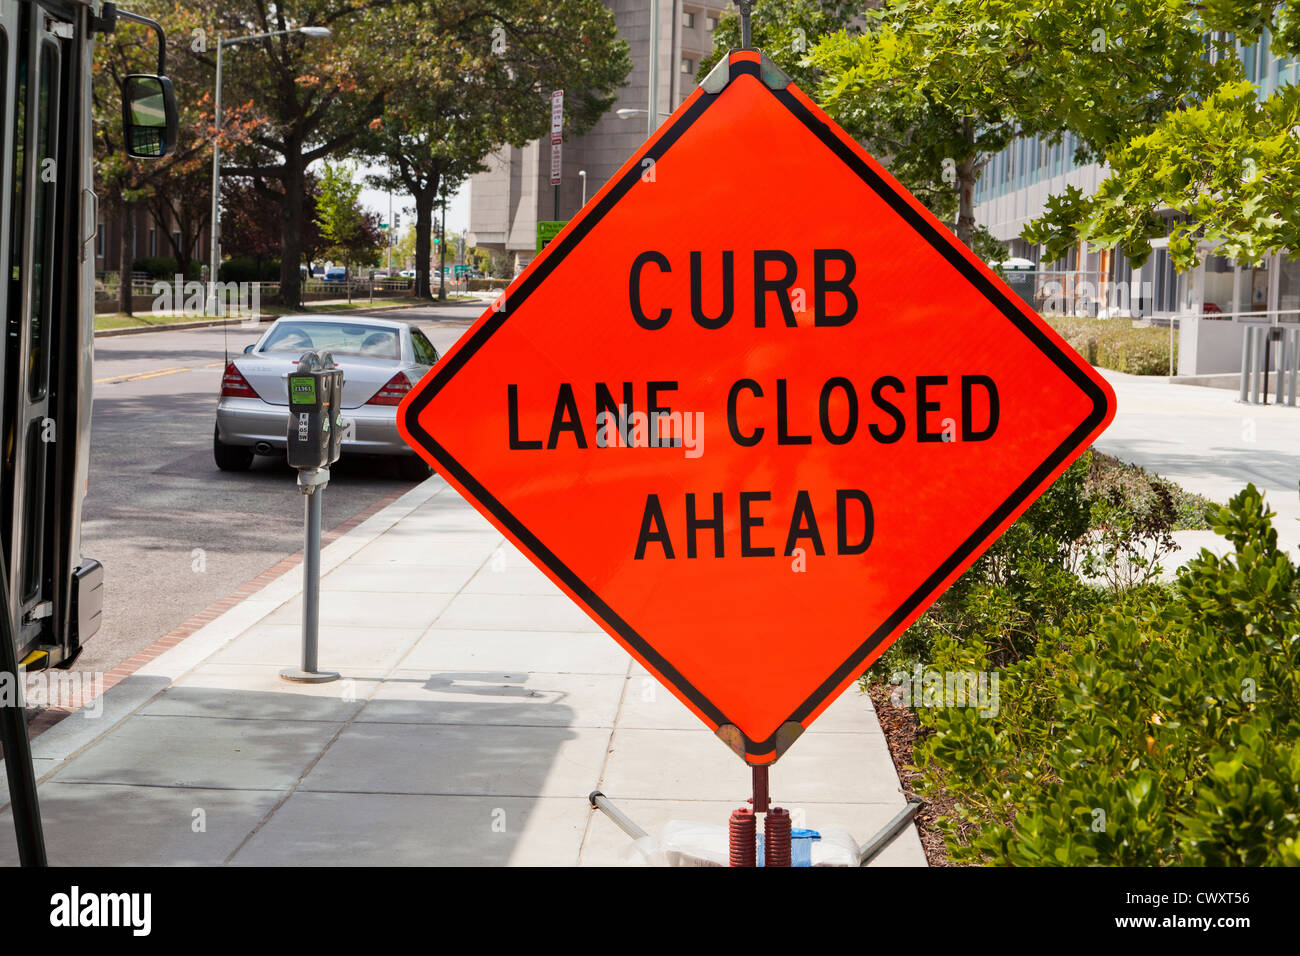 Curb Lane Closed Ahead sign Stock Photo